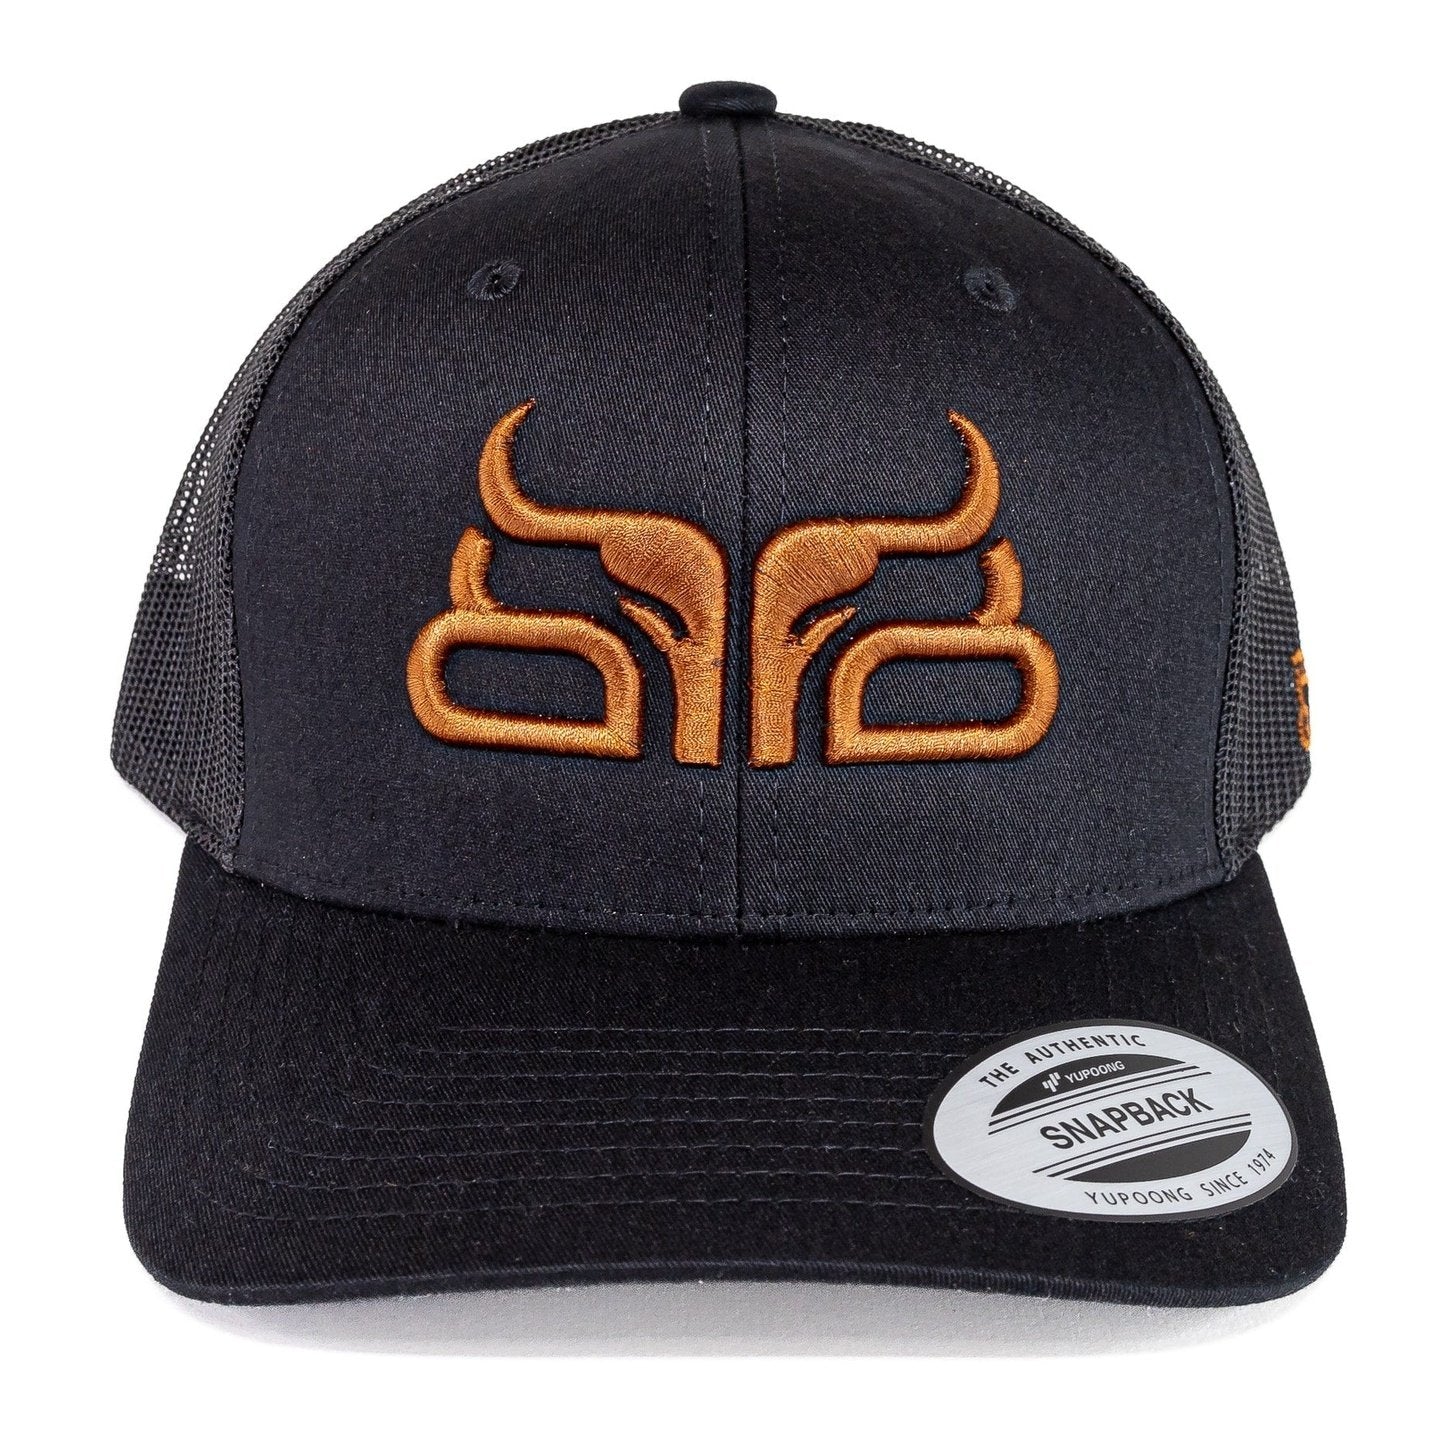 BareDown Brand Cap Trucker Snapback Curved Bill Black/Copper 112 - Baredown Brand